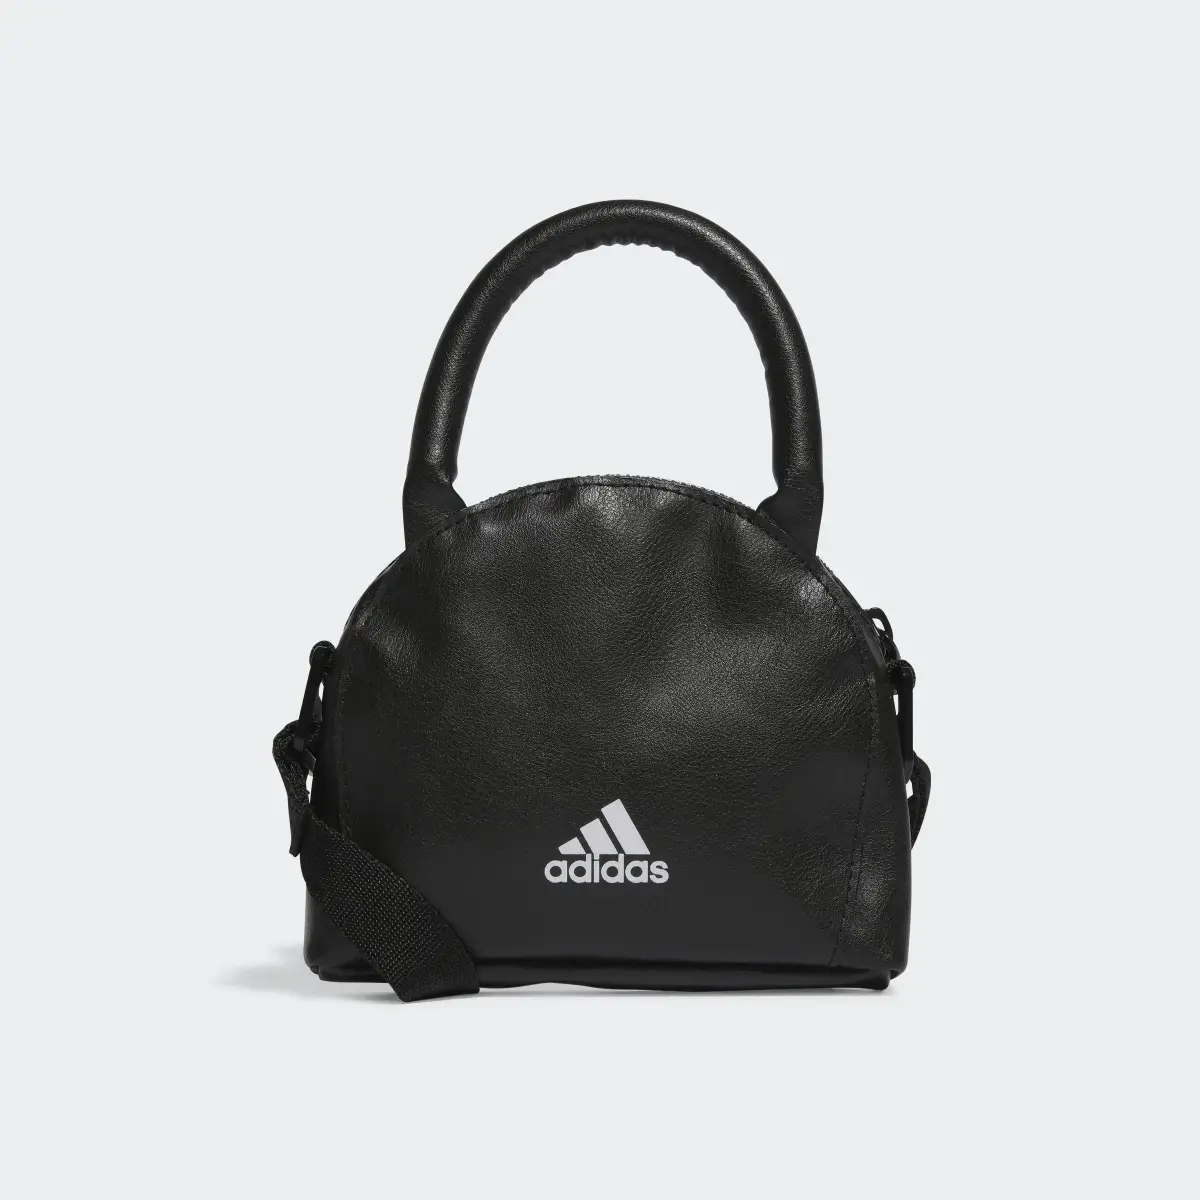 Adidas Petit sac Back to School. 2